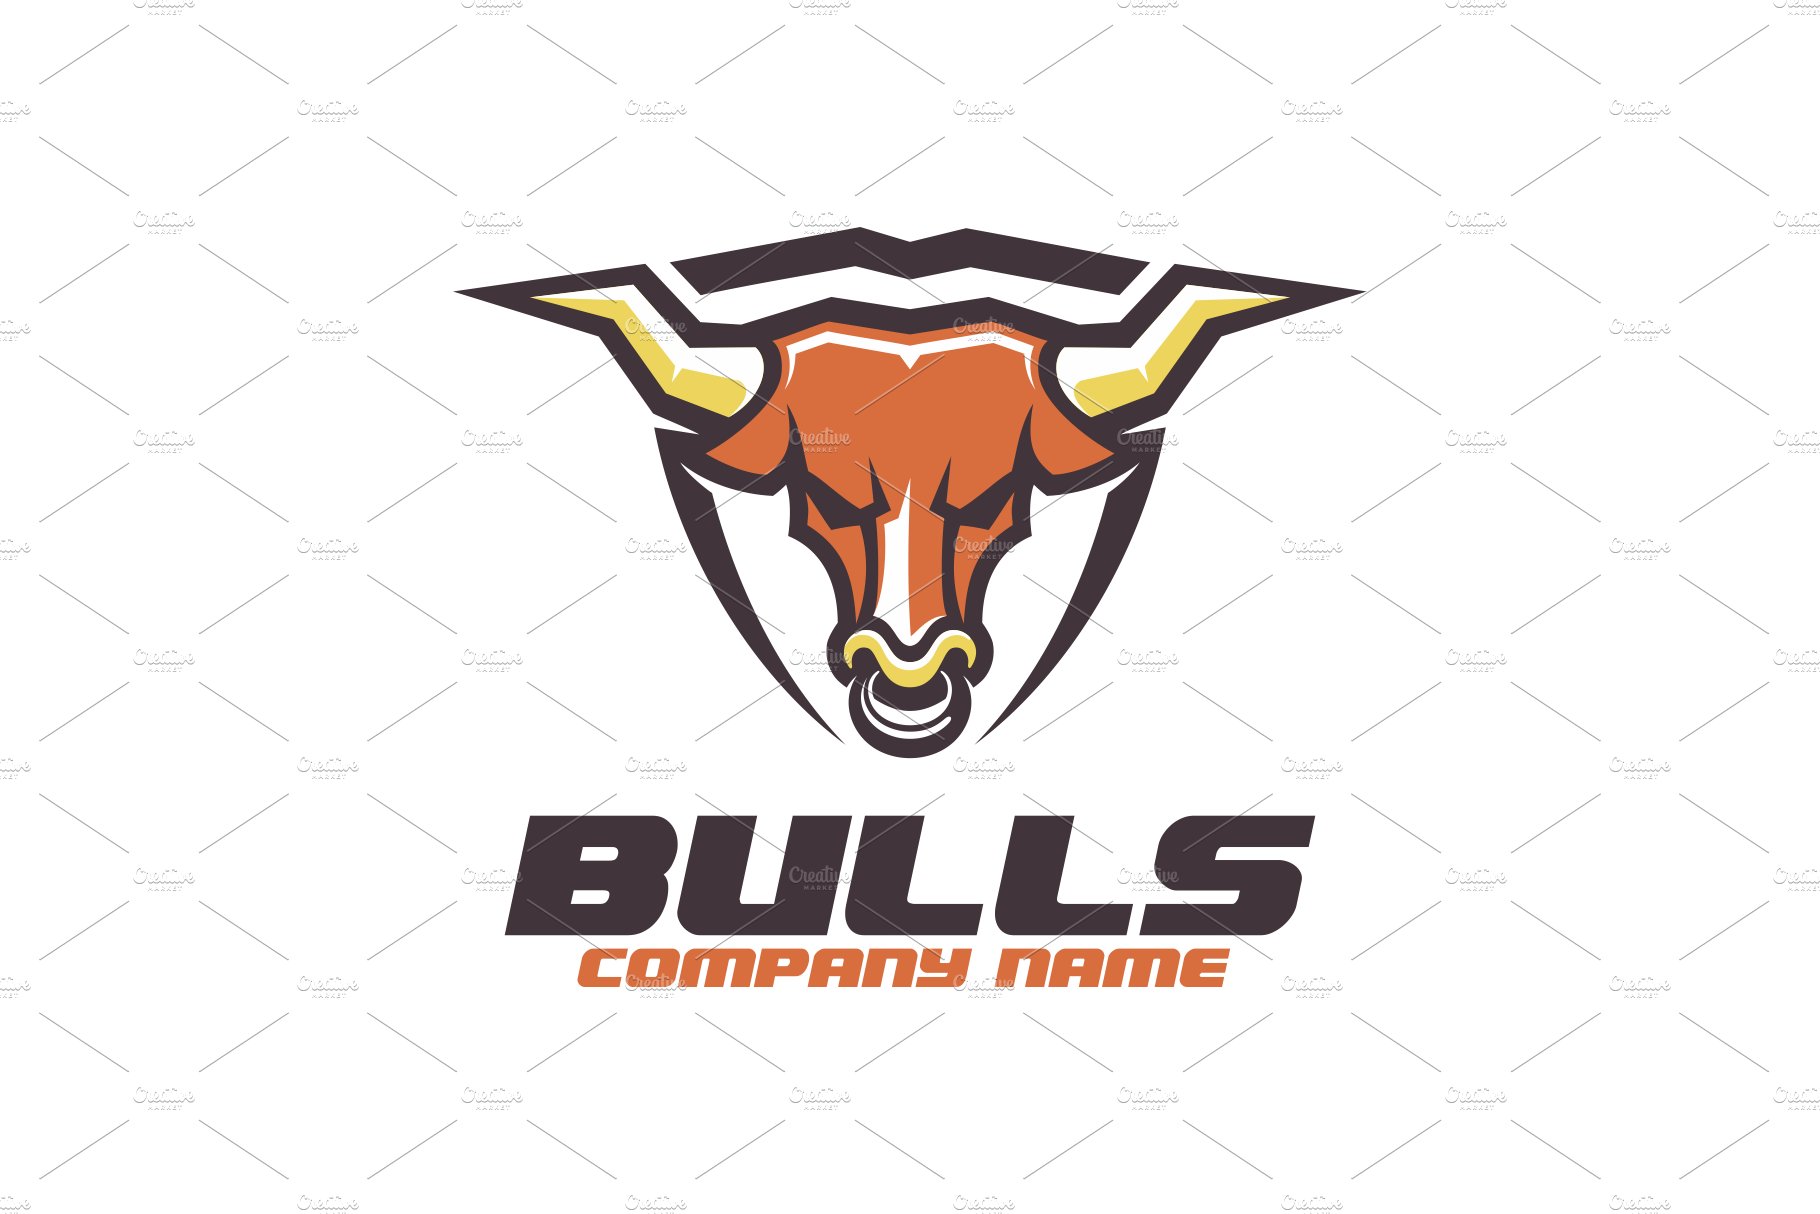 Bulls Logo cover image.